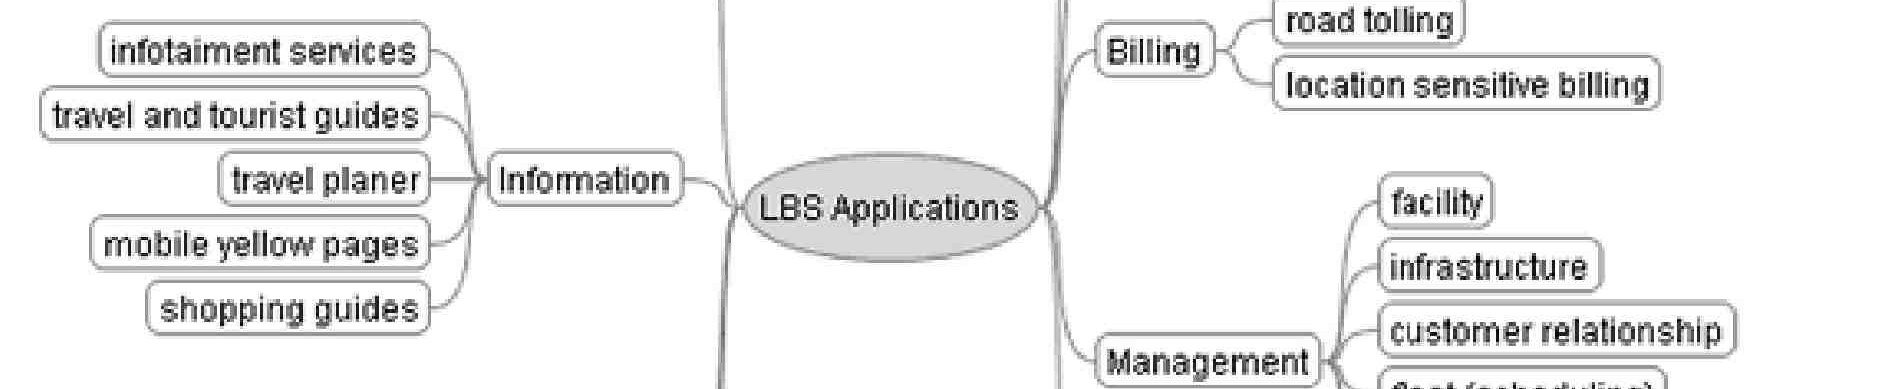 1.6 Location Based Applications Η ικανότητα της LBS τεχνολογίας να εντοπίζει την θέση ενός τερματικού είναι περισσότερο ένα χαρακτηριστικό γνώρισμα της συγκεκριμένης υπηρεσίας, παρά μια αυτόνομη